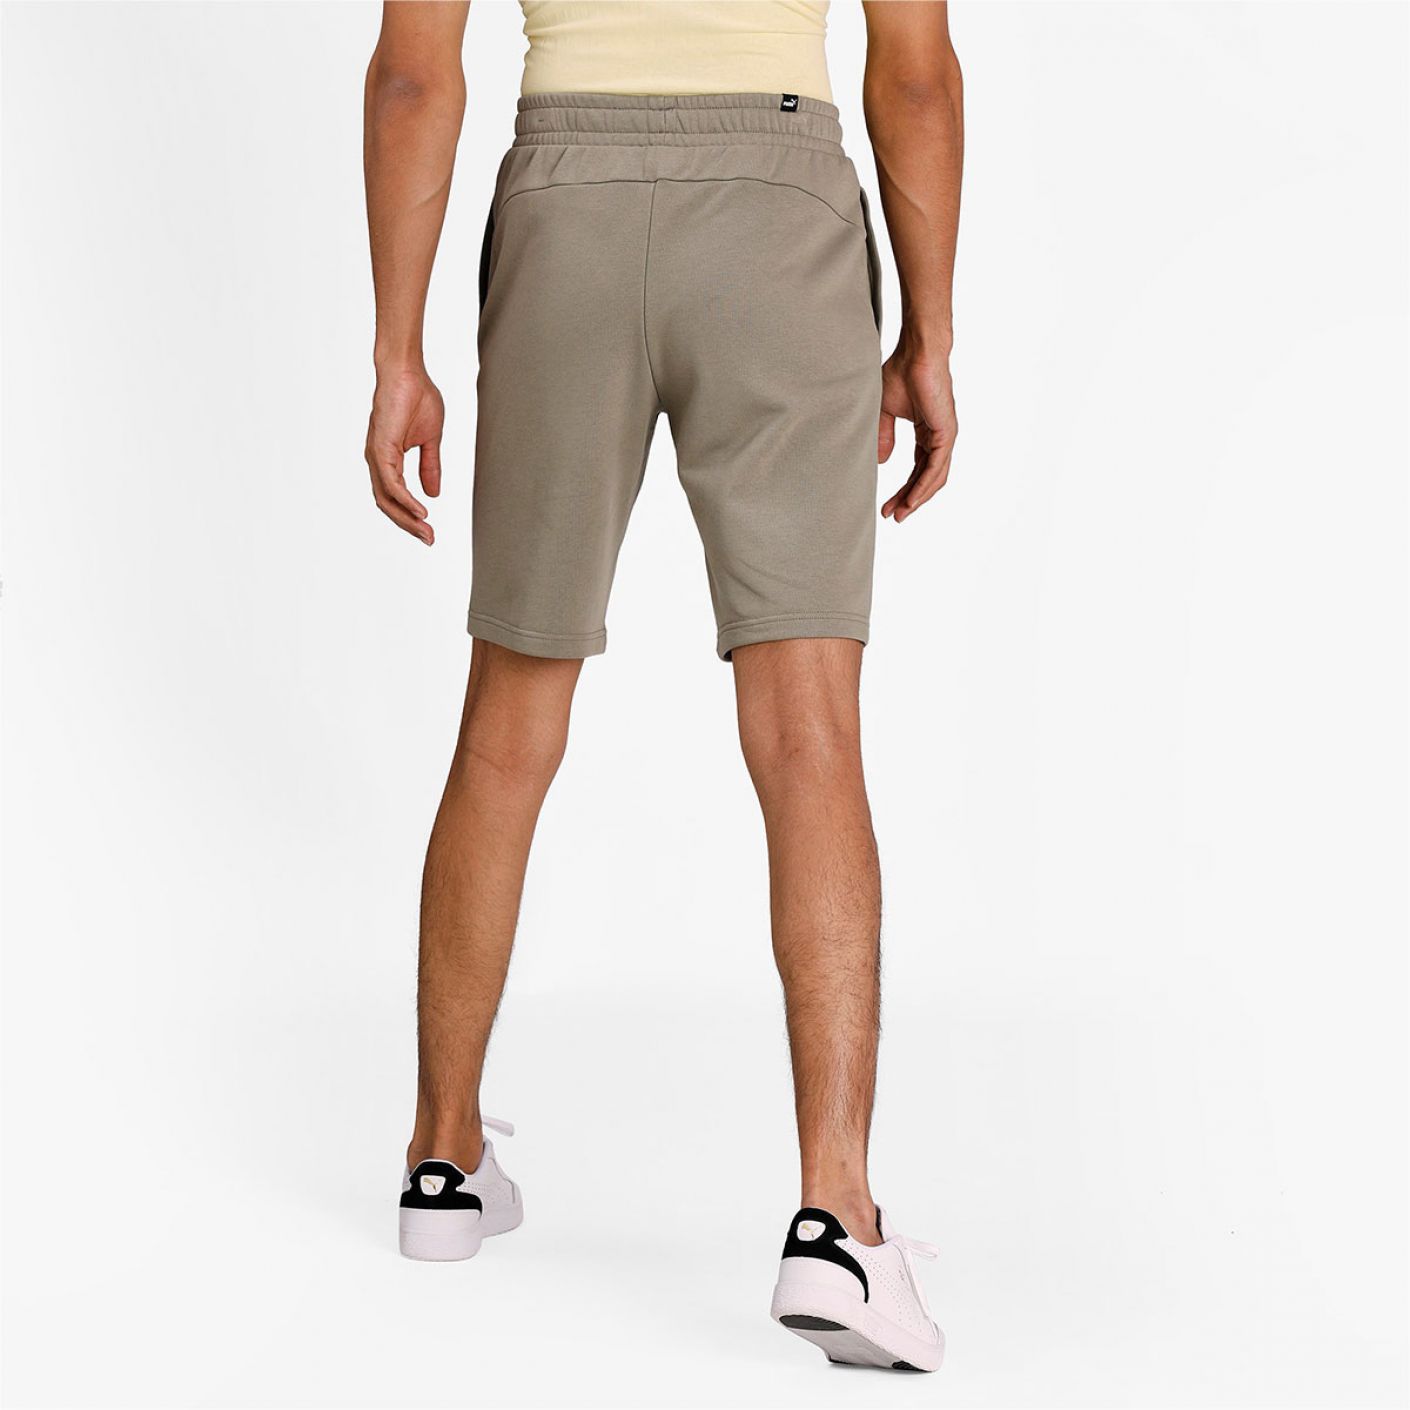 Puma - Big logo shorts 10 